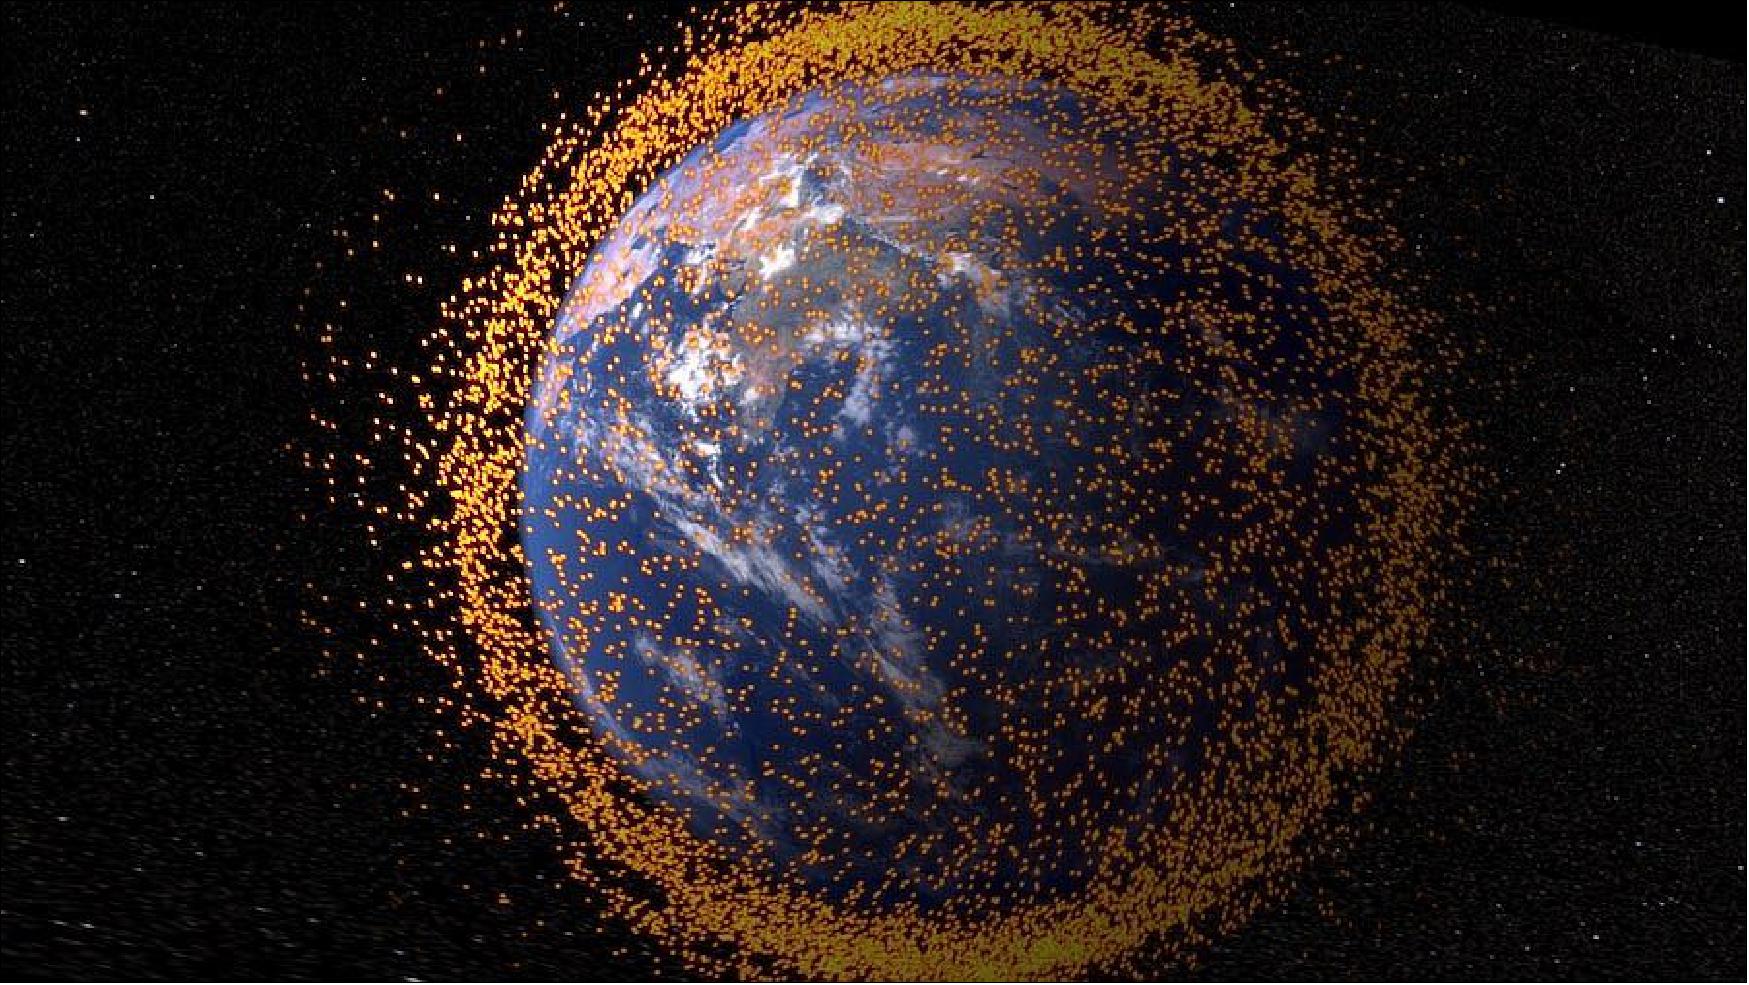 Figure 3: A visualization of space debris in low Earth orbit (image credit: NASA)